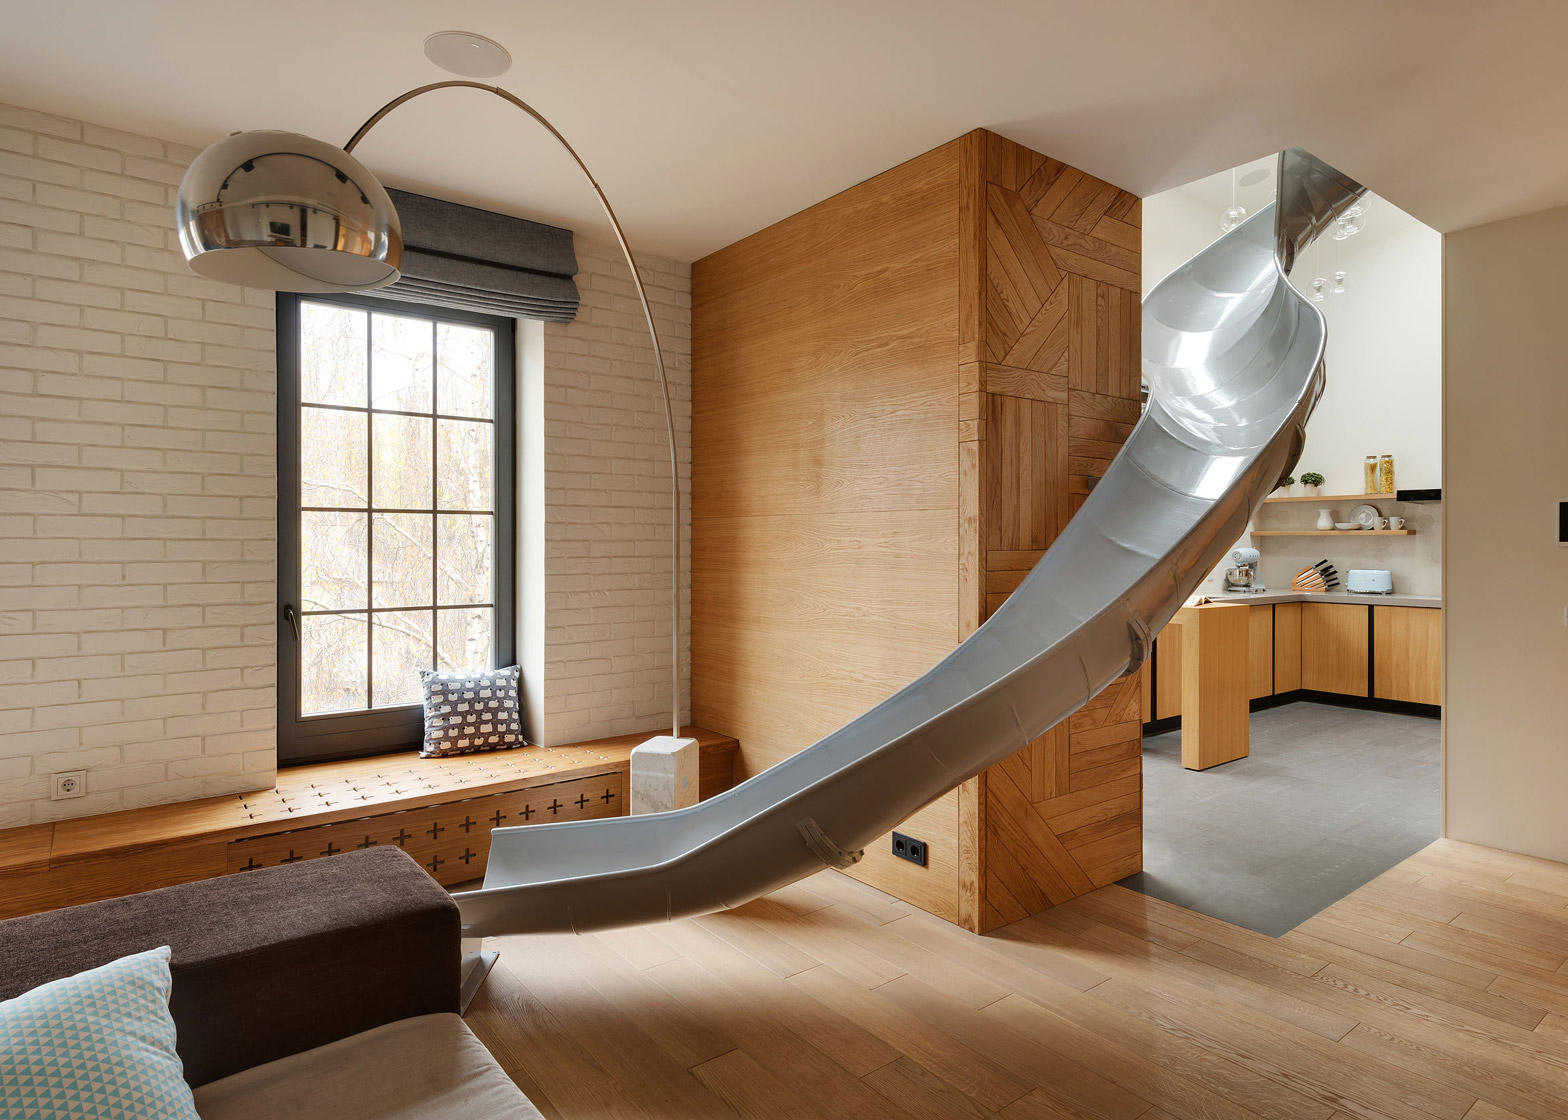 Apartment with a slide by KI Design Studio